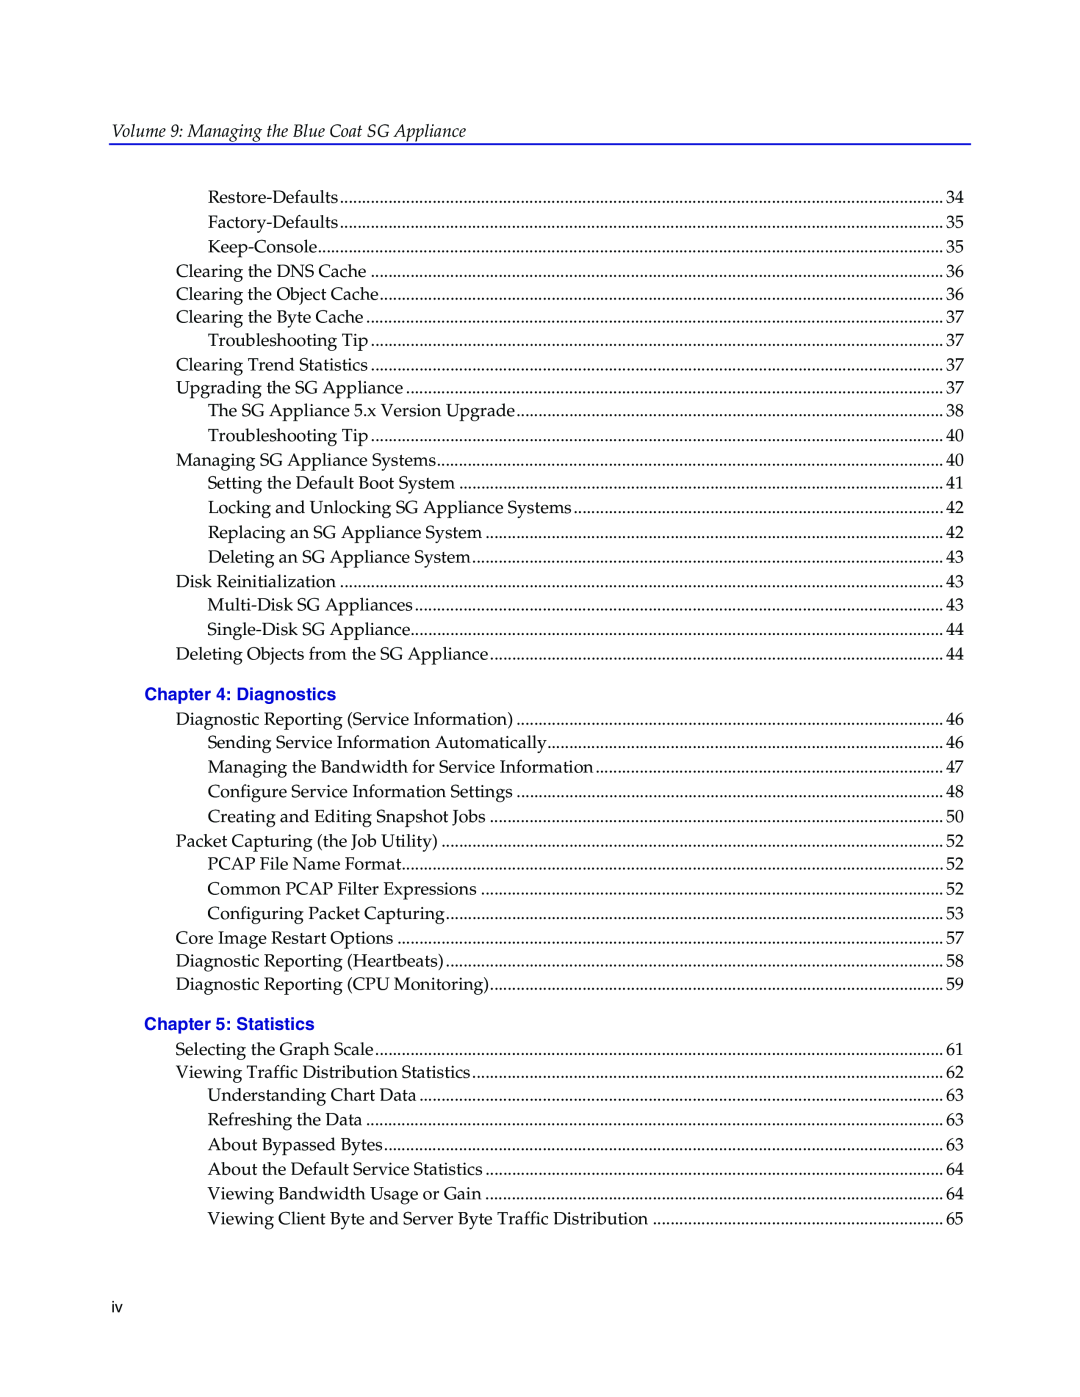 Blue Coat Systems SGOS Version 5.2.2 manual Volume 9: Managing the Blue Coat SG Appliance, Diagnostics, Statistics 